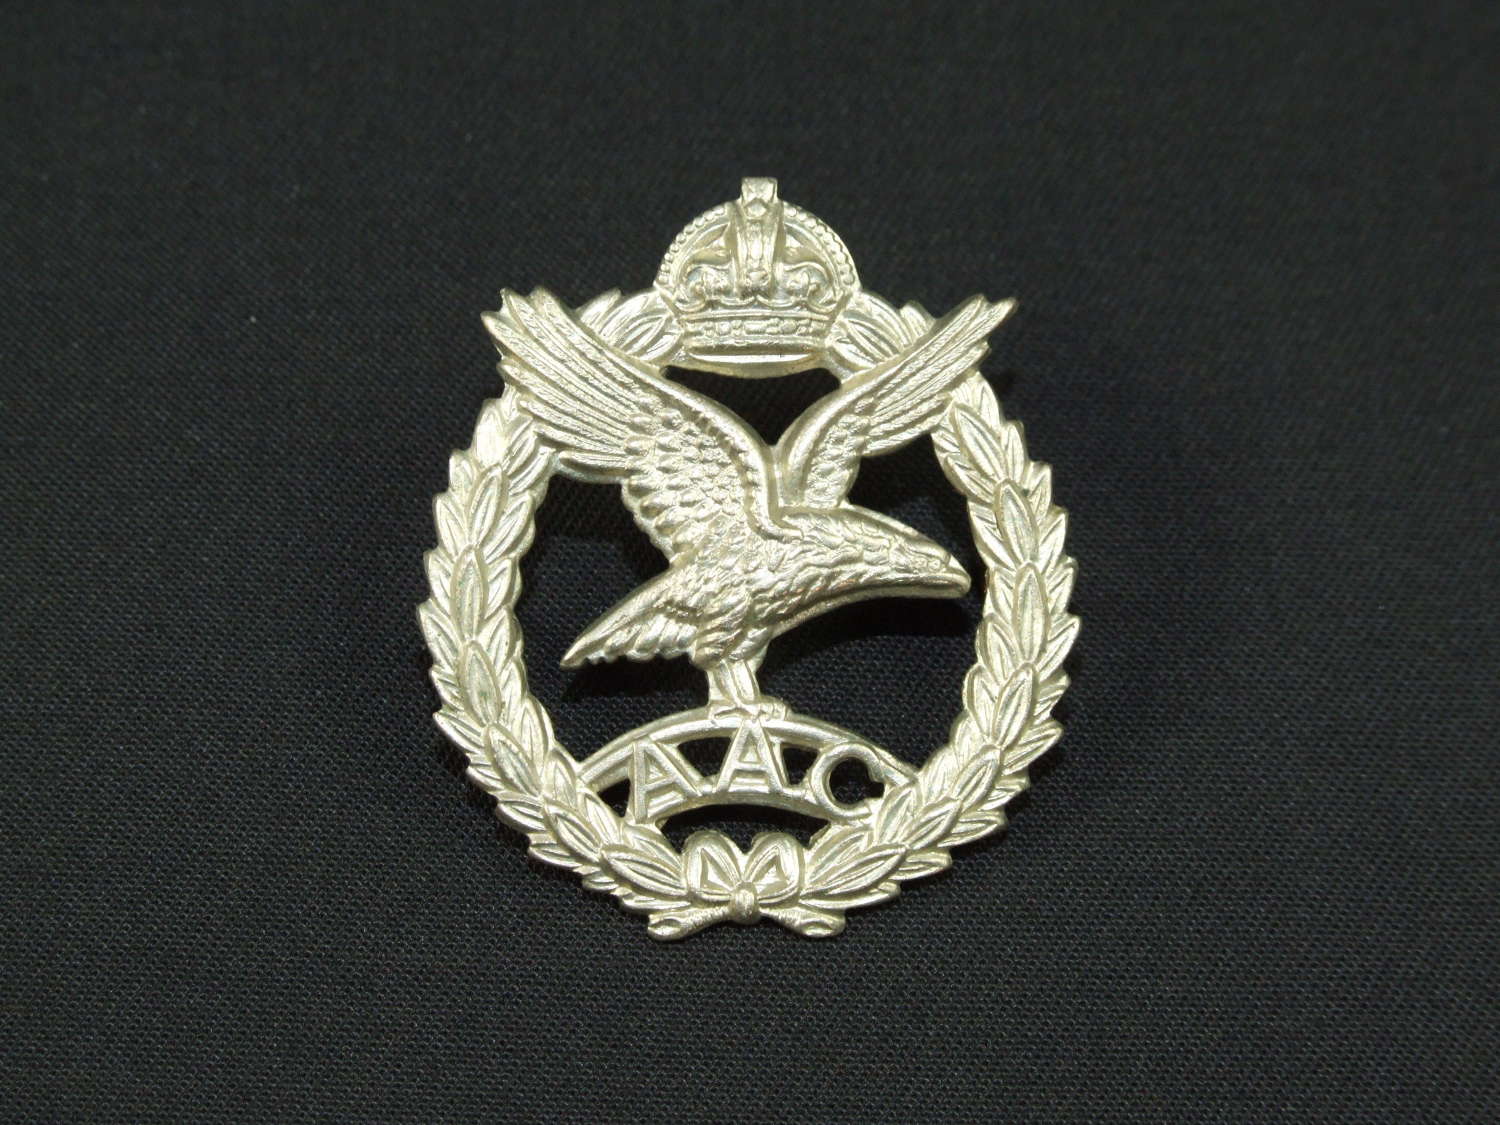 WW11 British Army Air Corps Beret Badge (aka Glider Pilot's badge)